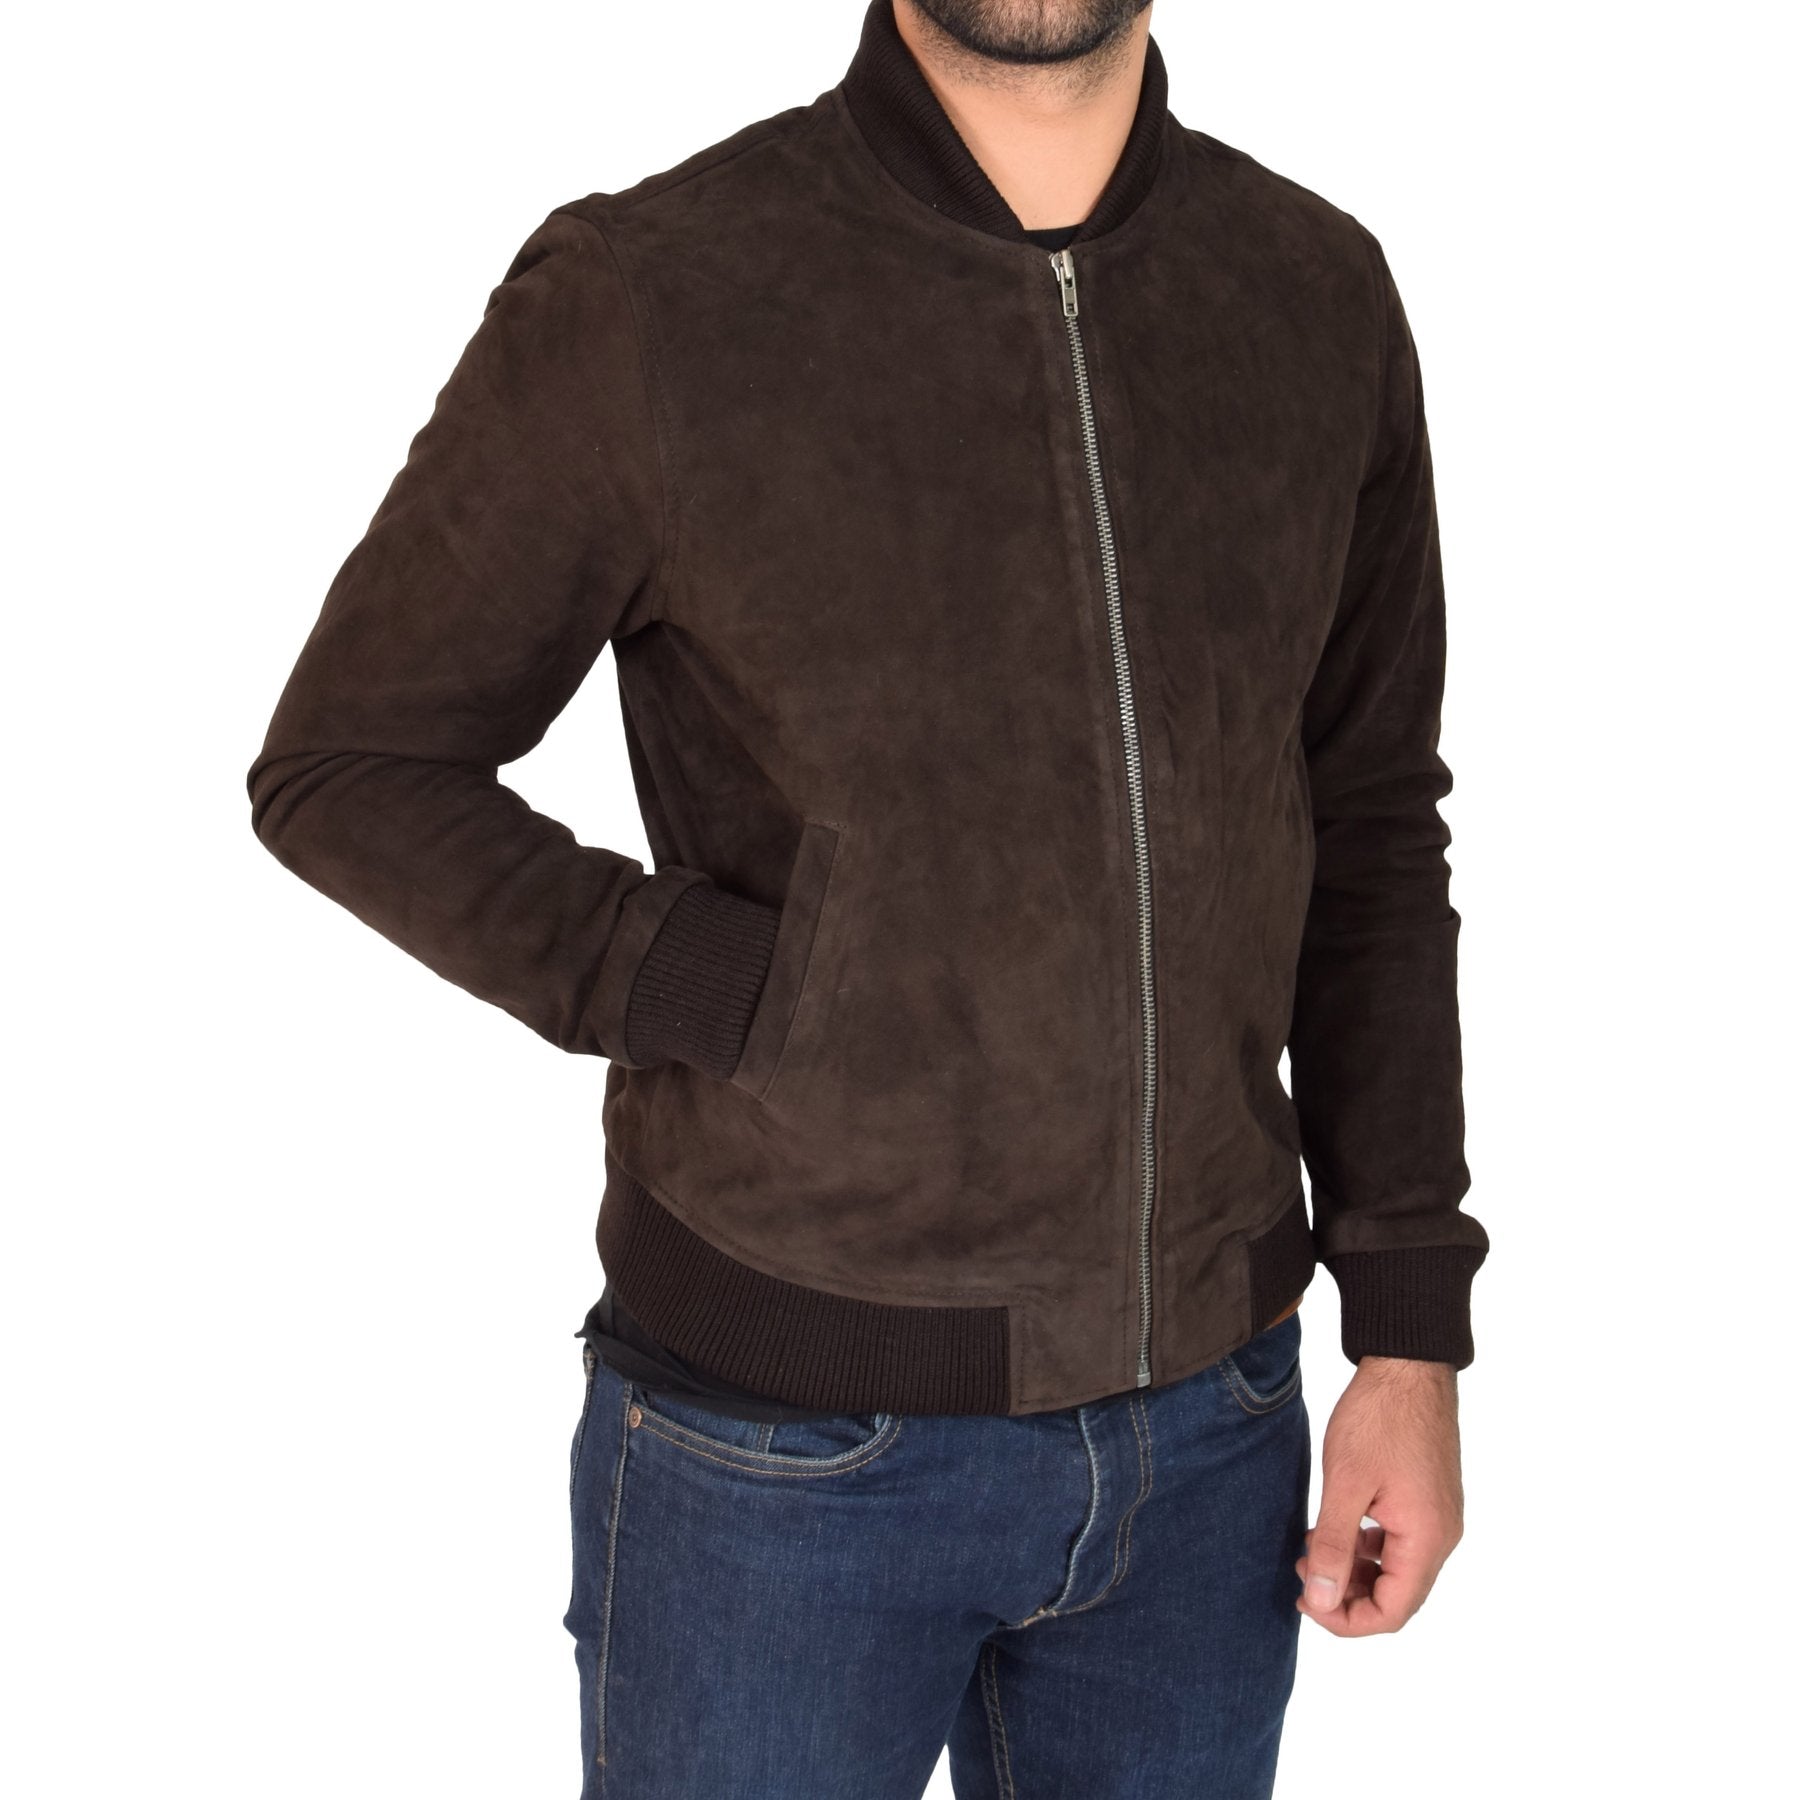 Spine Spark Brown Soft Suede Leather Varsity Style Jacket